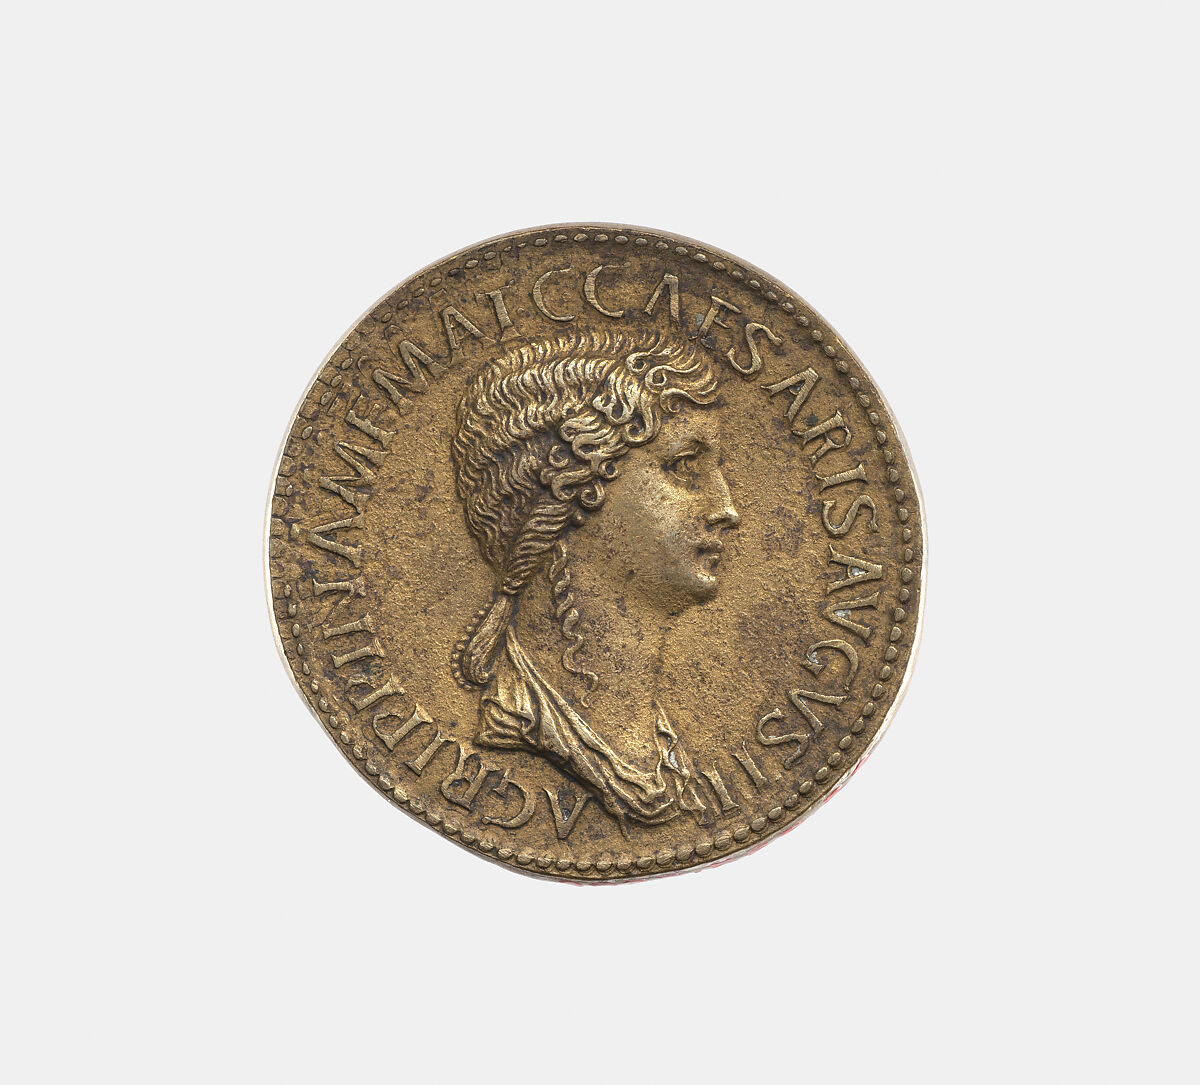 Agrippina Sr. d. A.D. 33, daughter of Marcus Agrippa, wife of Germanicus, Giovanni del Cavino (Italian, Padua 1500–1570 Padua)  , called Il Padovano, Bronze, Italian, Padua 